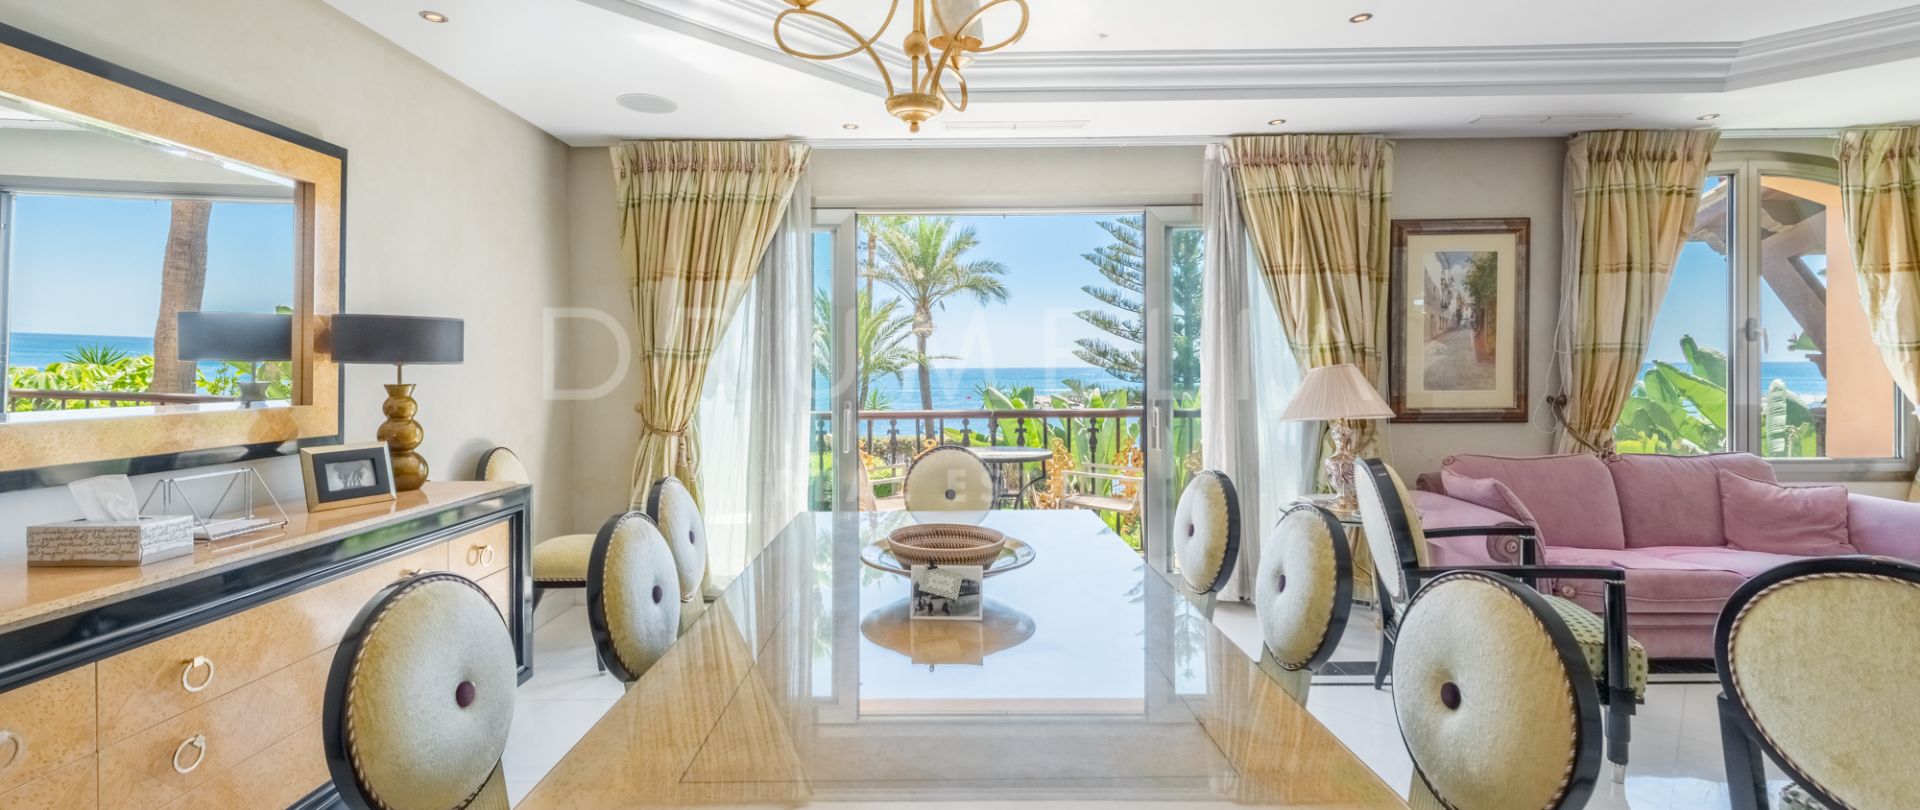 Front line beach luxury apartment with amazing sea views in Puerto Banus area, Marbella